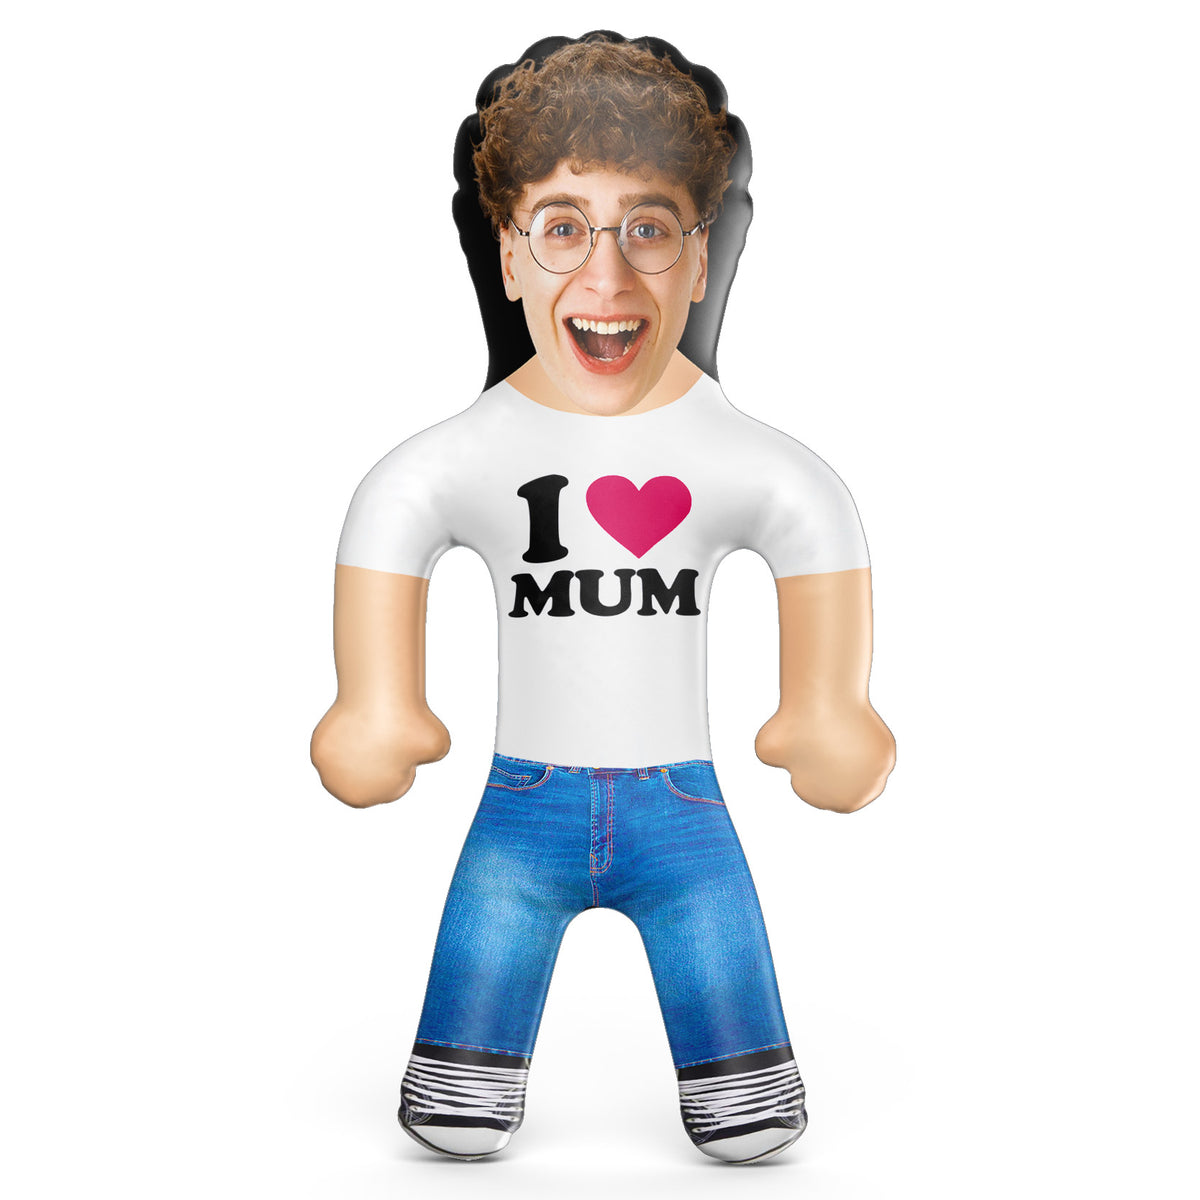 I Heart Mum Inflatable Doll - I Heart Mum Blow Up Doll